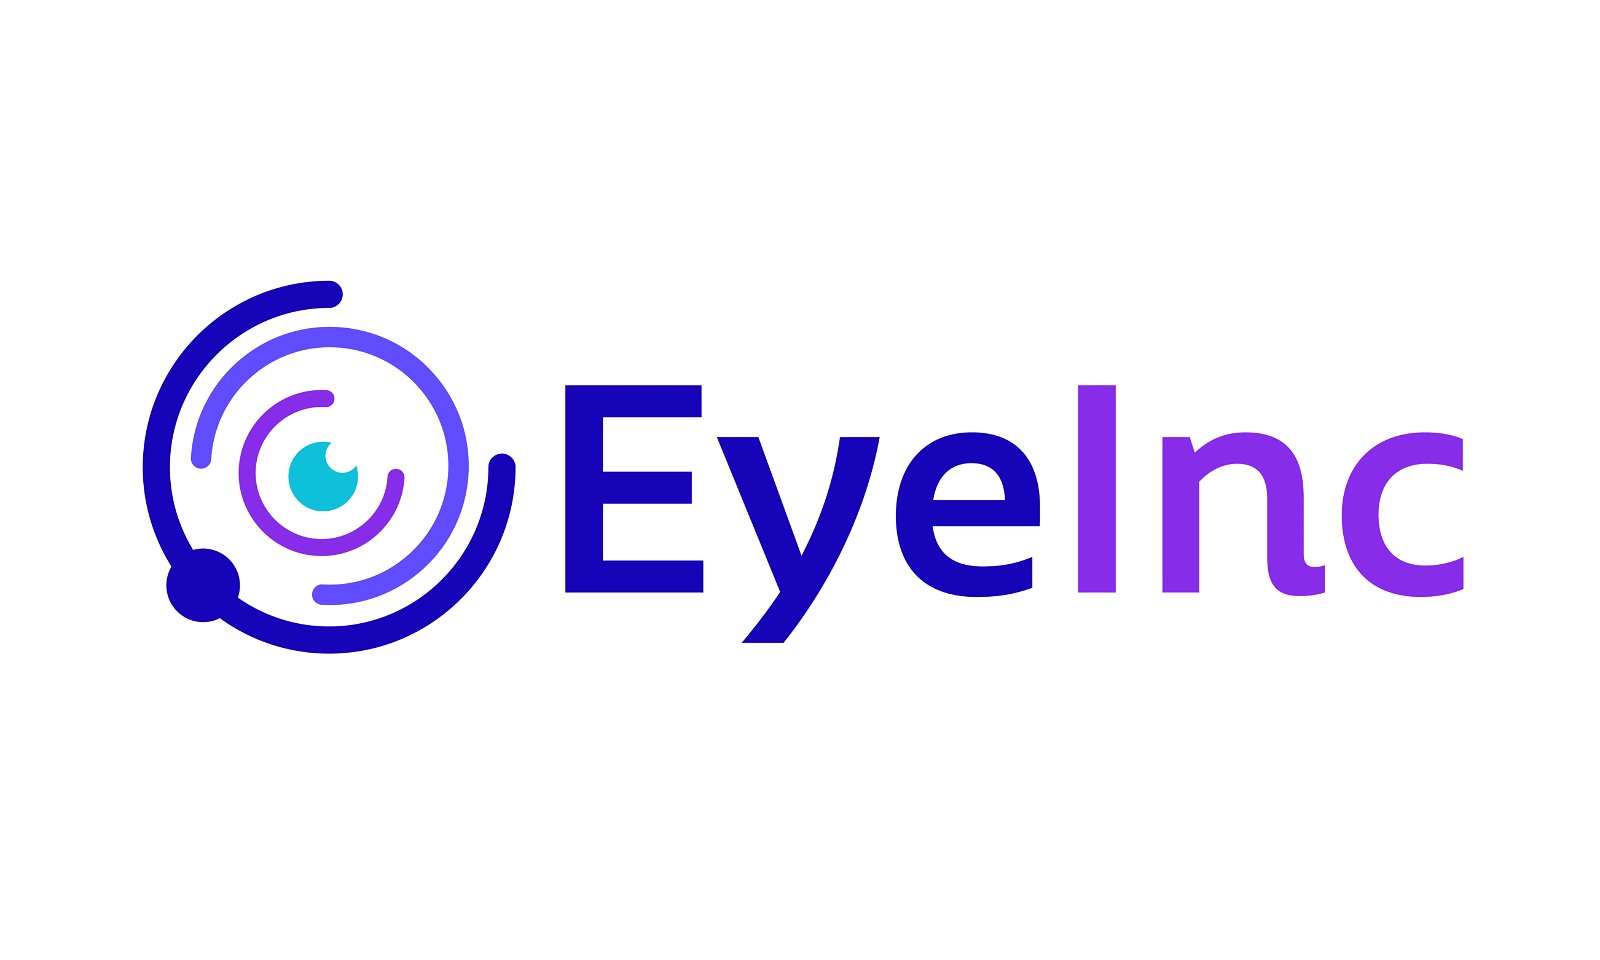 EyeInc.com - Creative brandable domain for sale